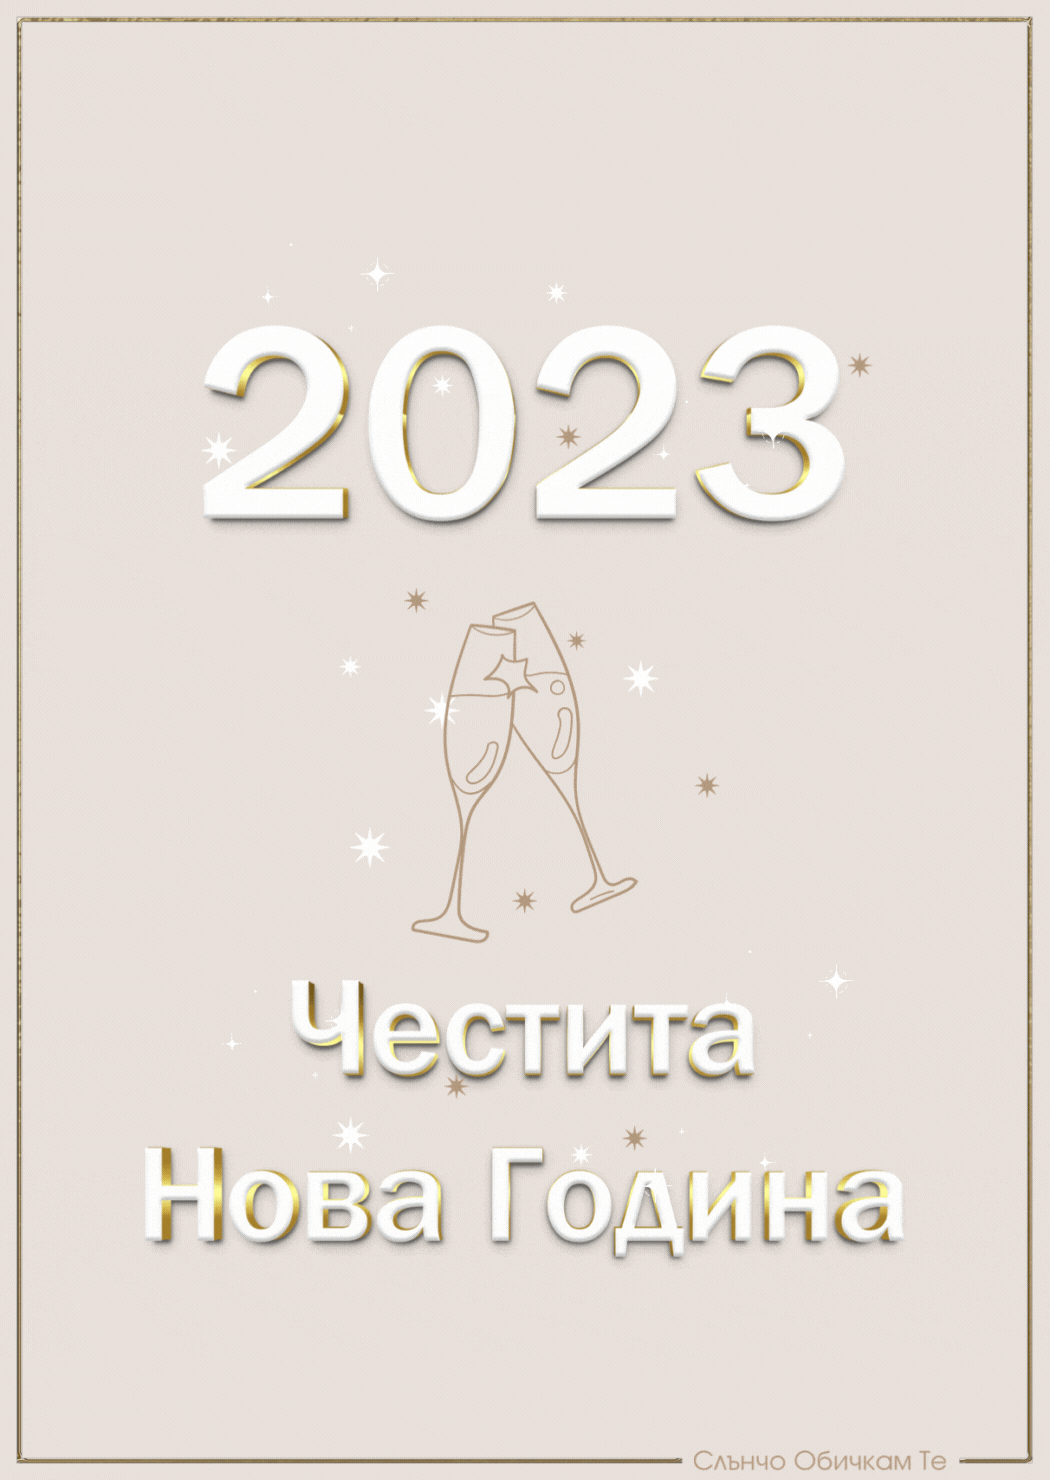 Честита Нова Година 2023 бежаво - Новогодишни картички, Нова година 2023, честита нова година, картички за нова година 2023, пожелания за нова година, анимация за нова година, видео нова година, анимирани картички за нова година, слънчо обичкам те